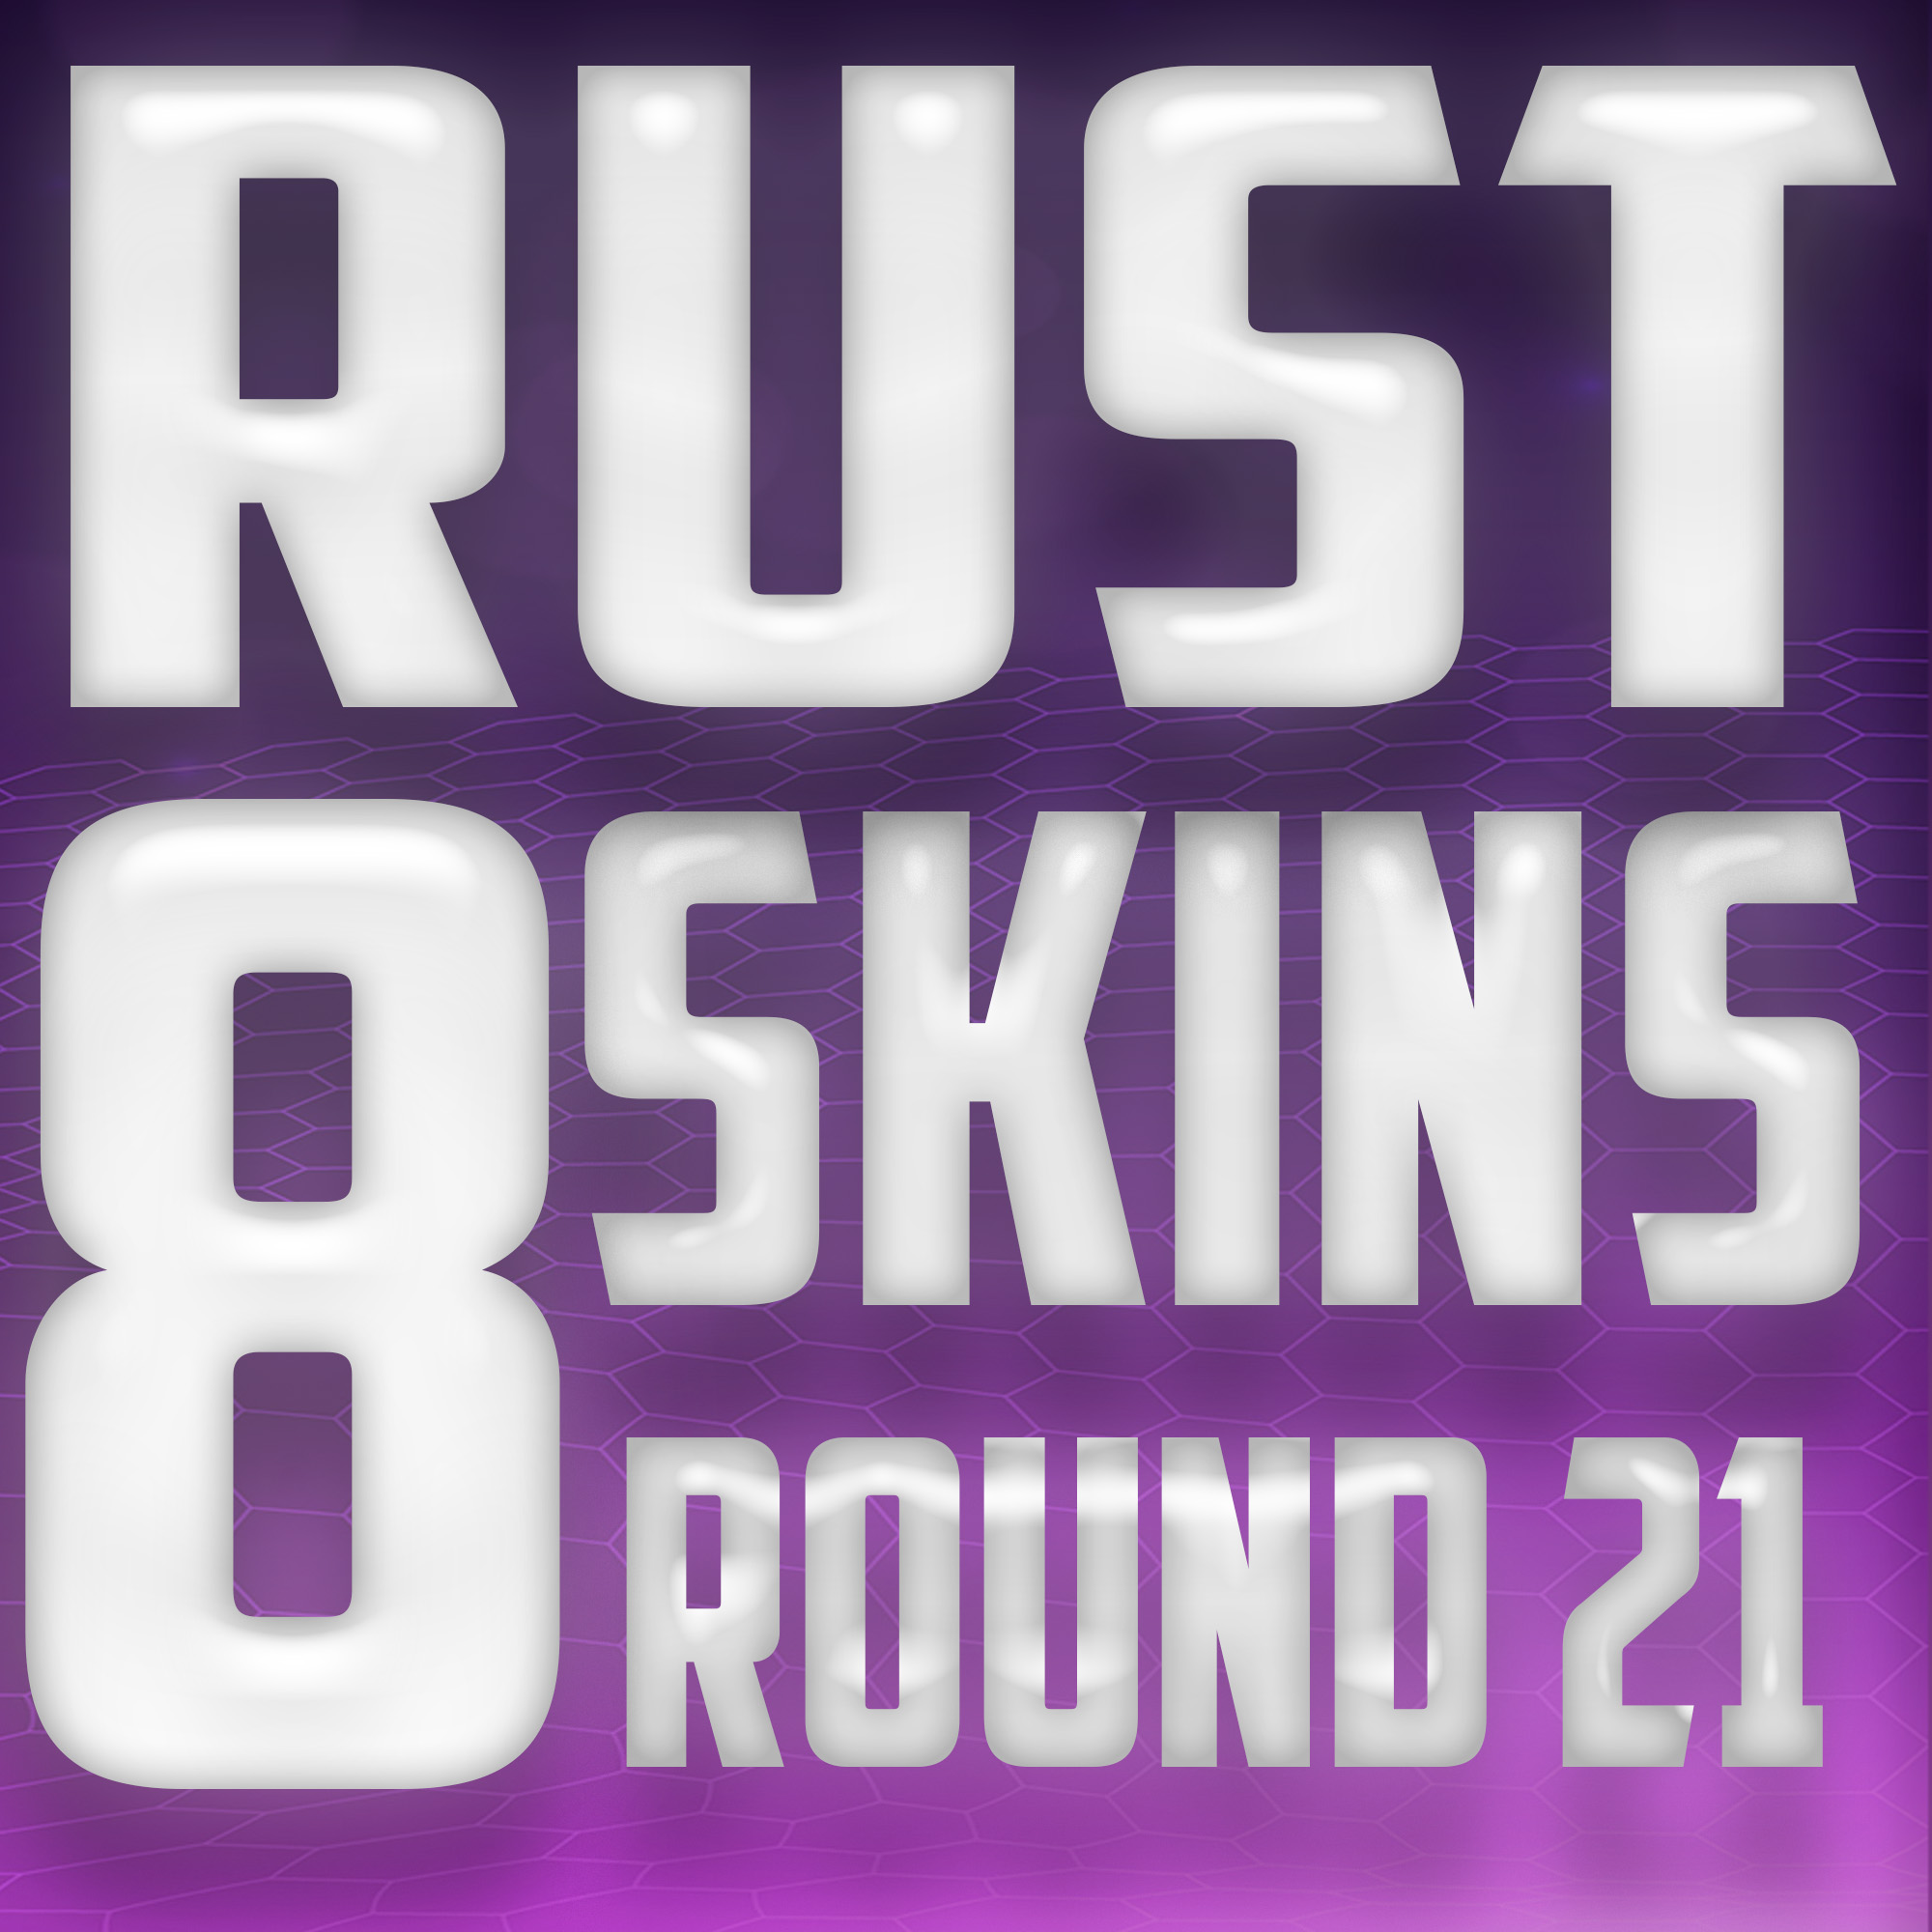 Rust twitch drops round 11 когда фото 89